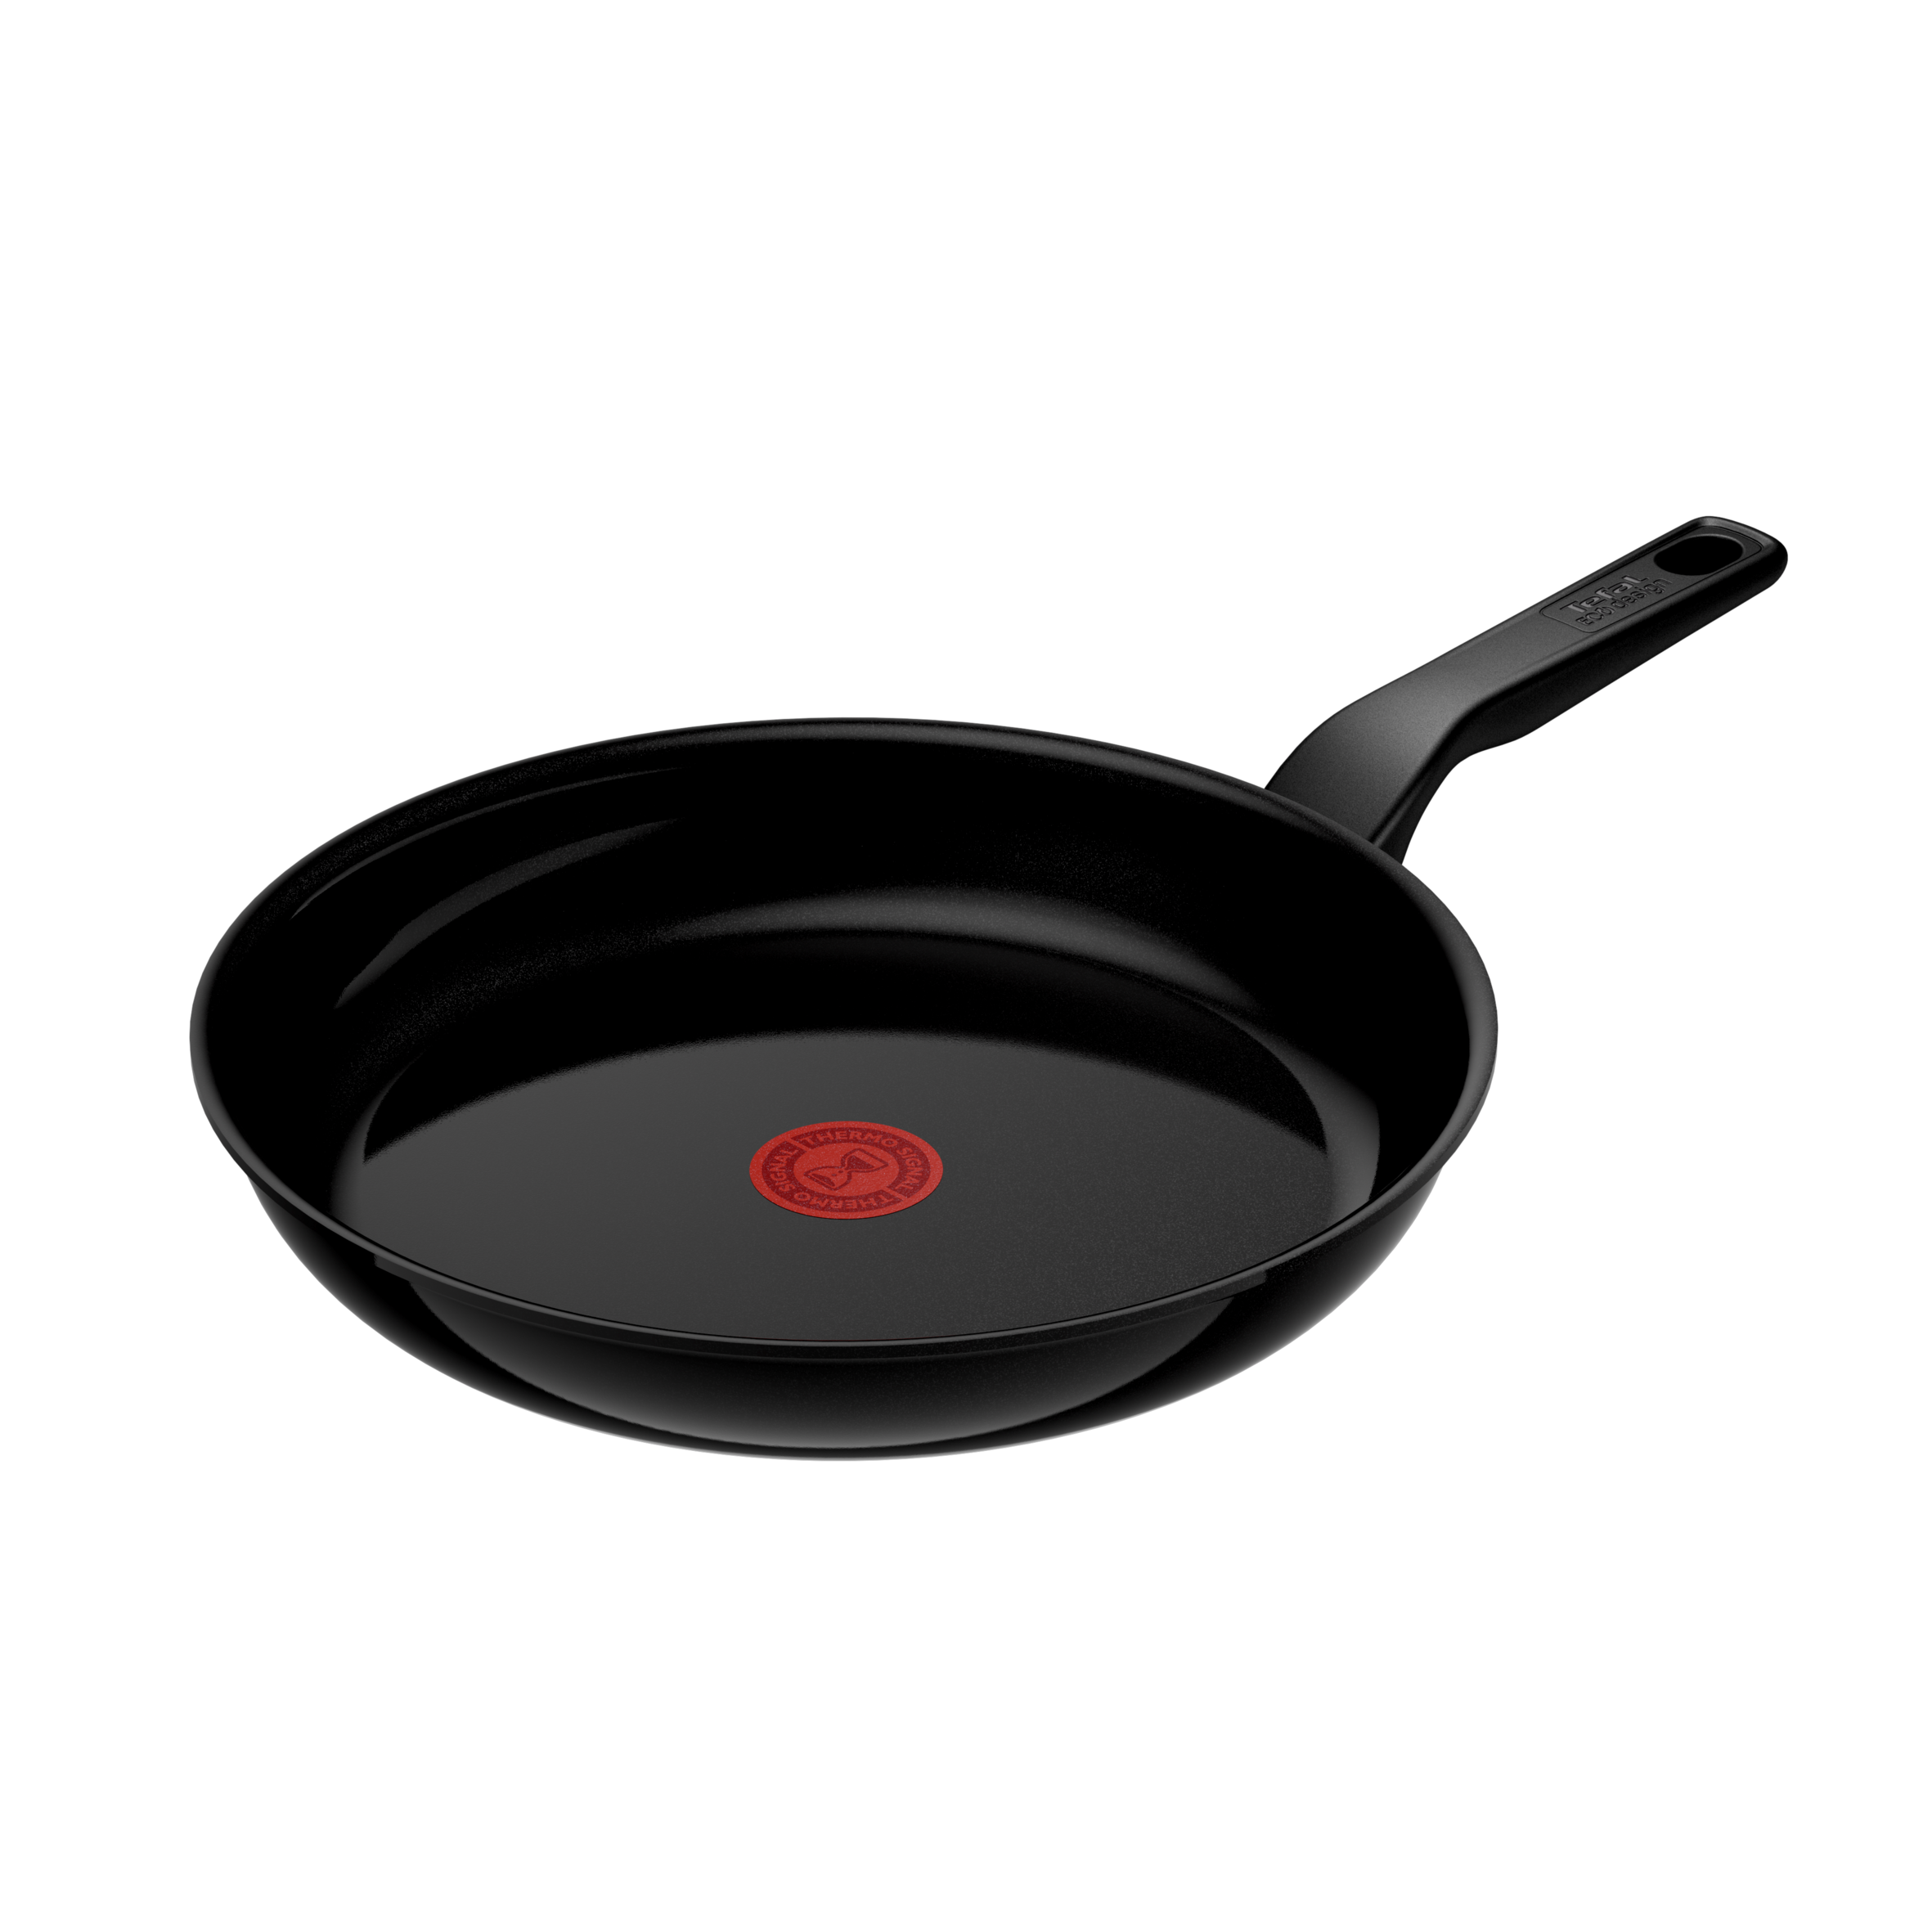 Tefal Renew Black Frypan 28cm - C4320623 - Ceramic Non-Stick Coating